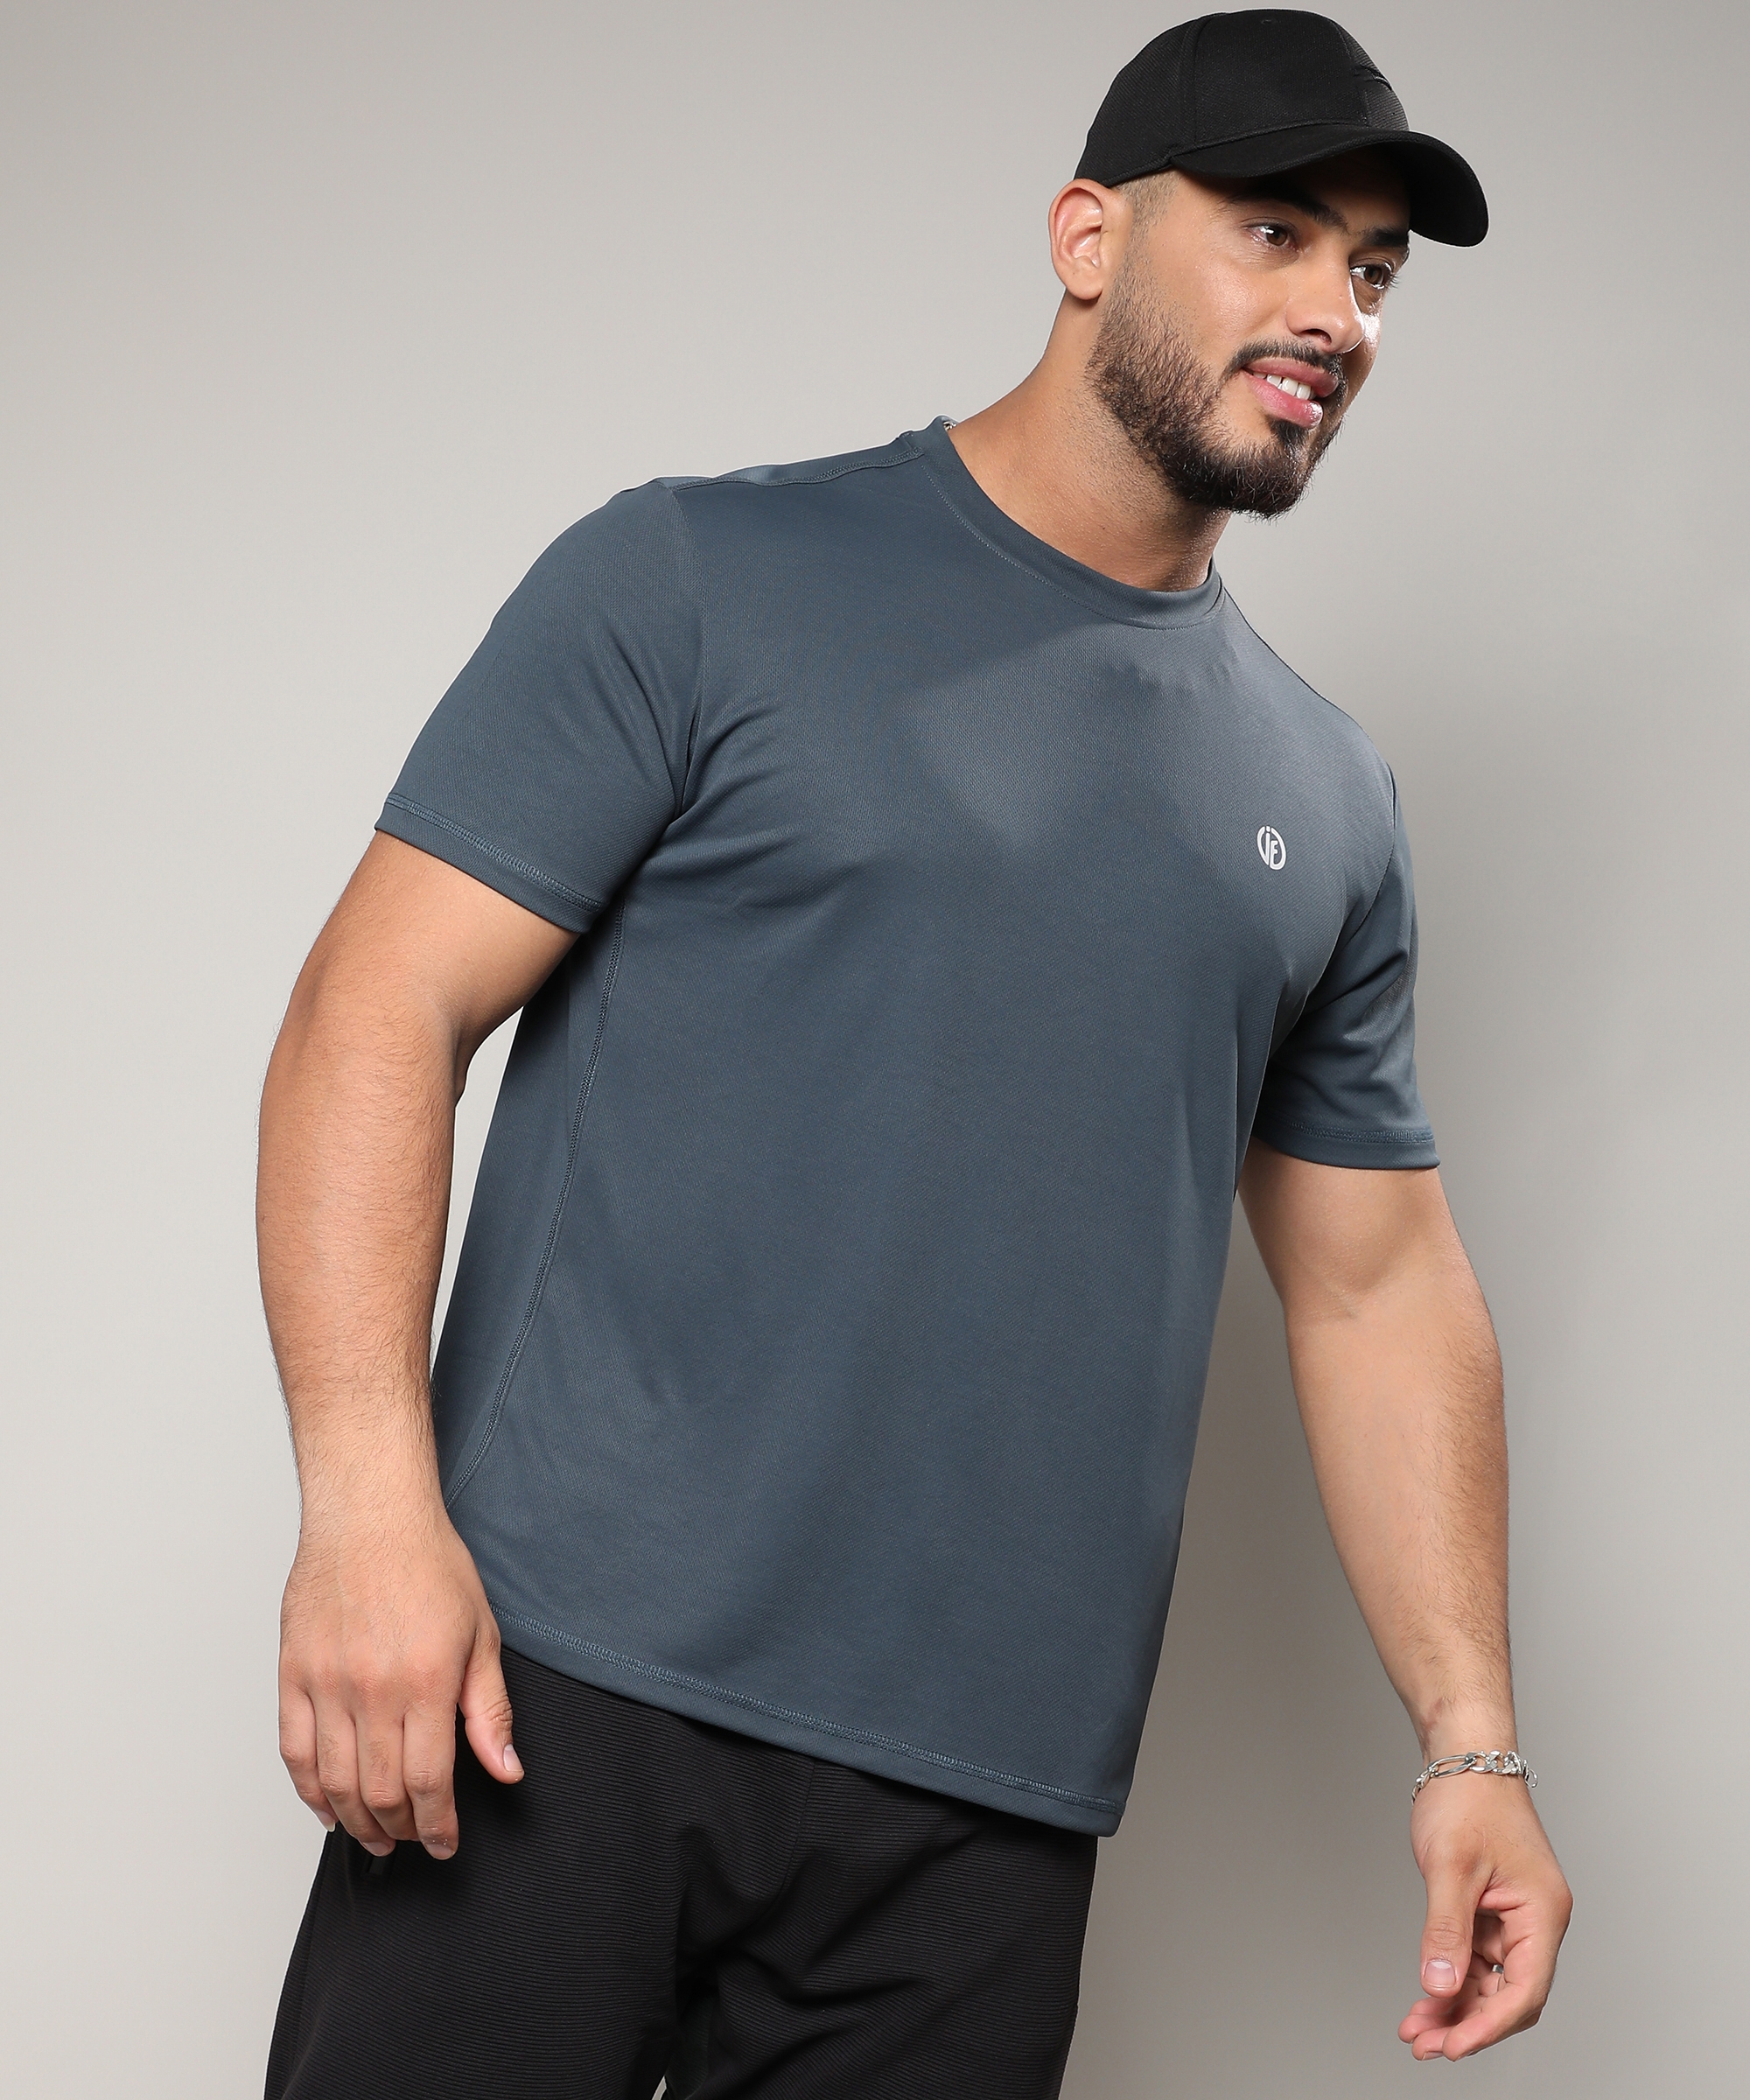 Instafab Plus | Men's Dark Grey Basic Activewear T-Shirt